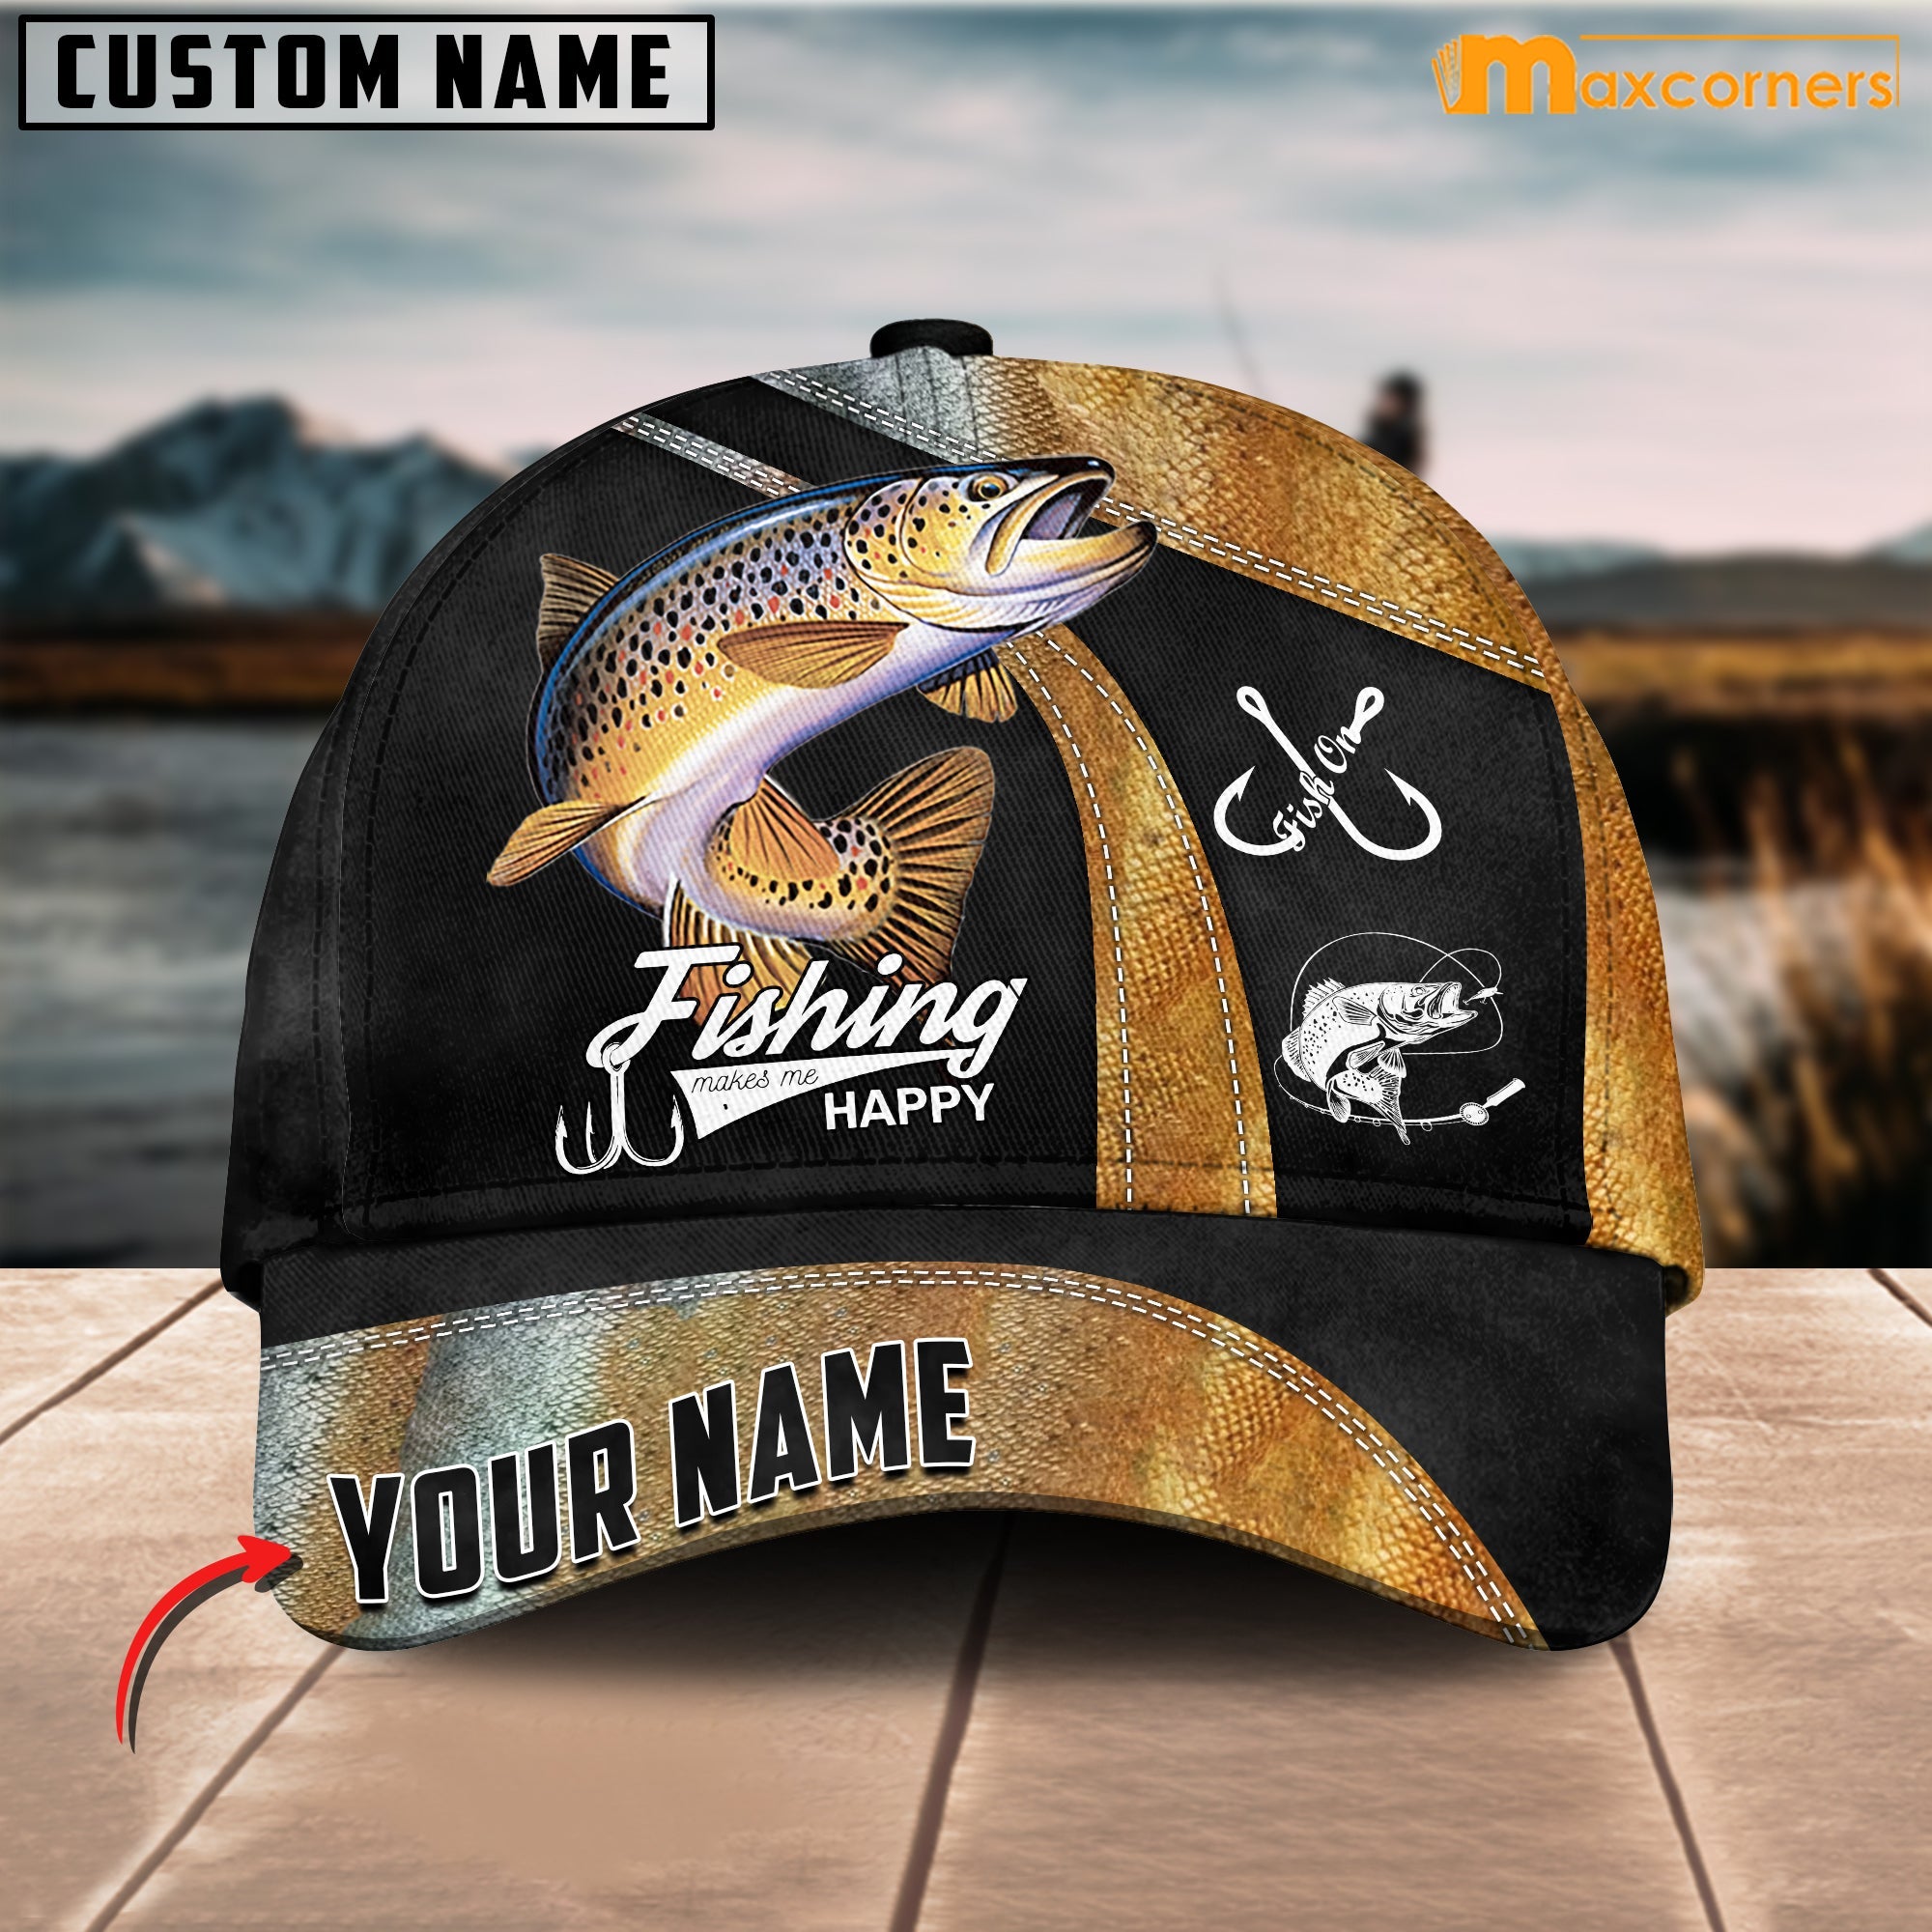 Cornbee Personalized Trout Fishing Cap